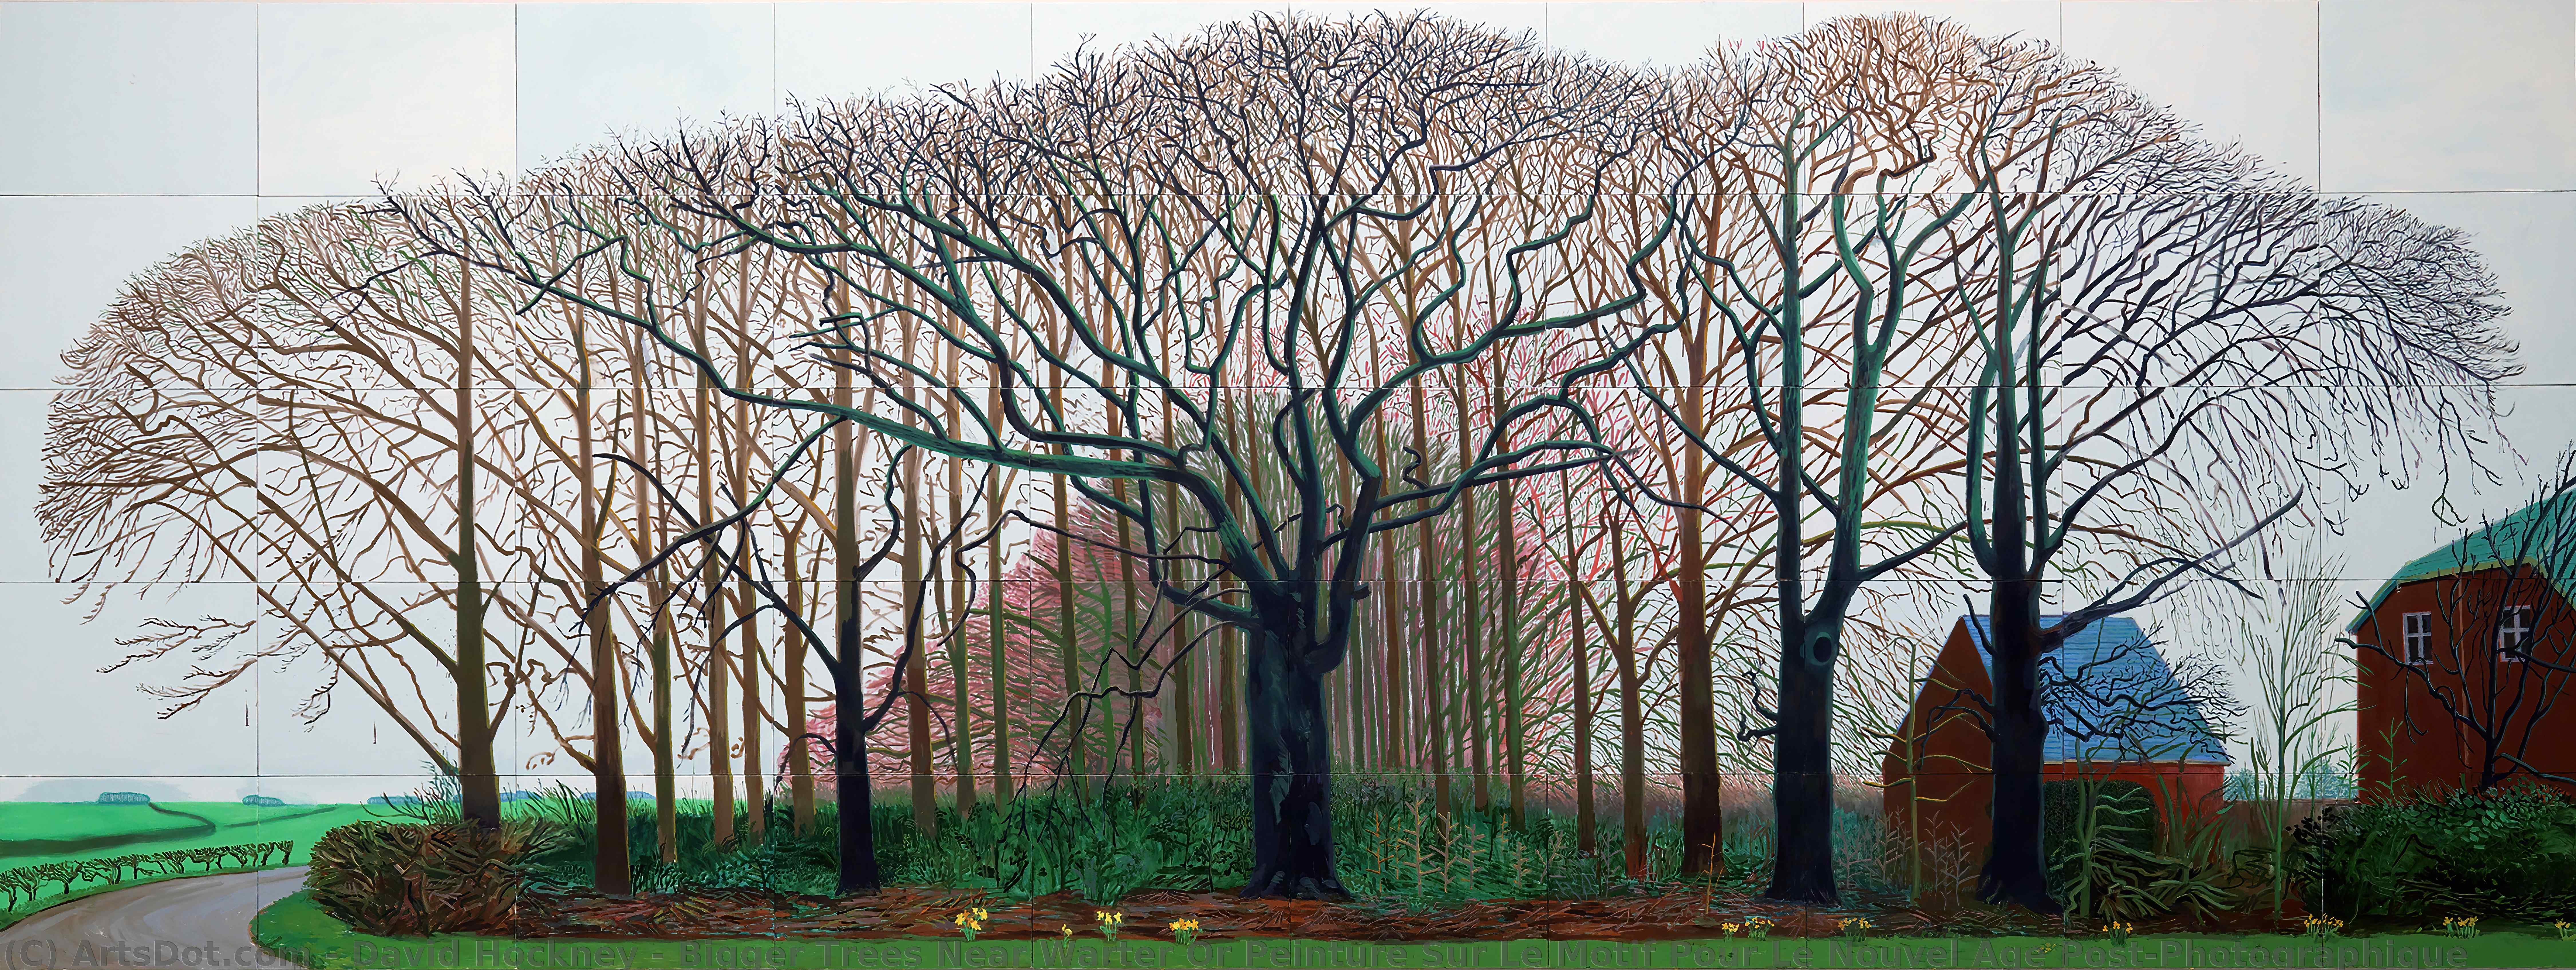 Wikoo.org - موسوعة الفنون الجميلة - اللوحة، العمل الفني David Hockney - Bigger Trees Near Warter Or Peinture Sur Le Motif Pour Le Nouvel Age Post-Photographique